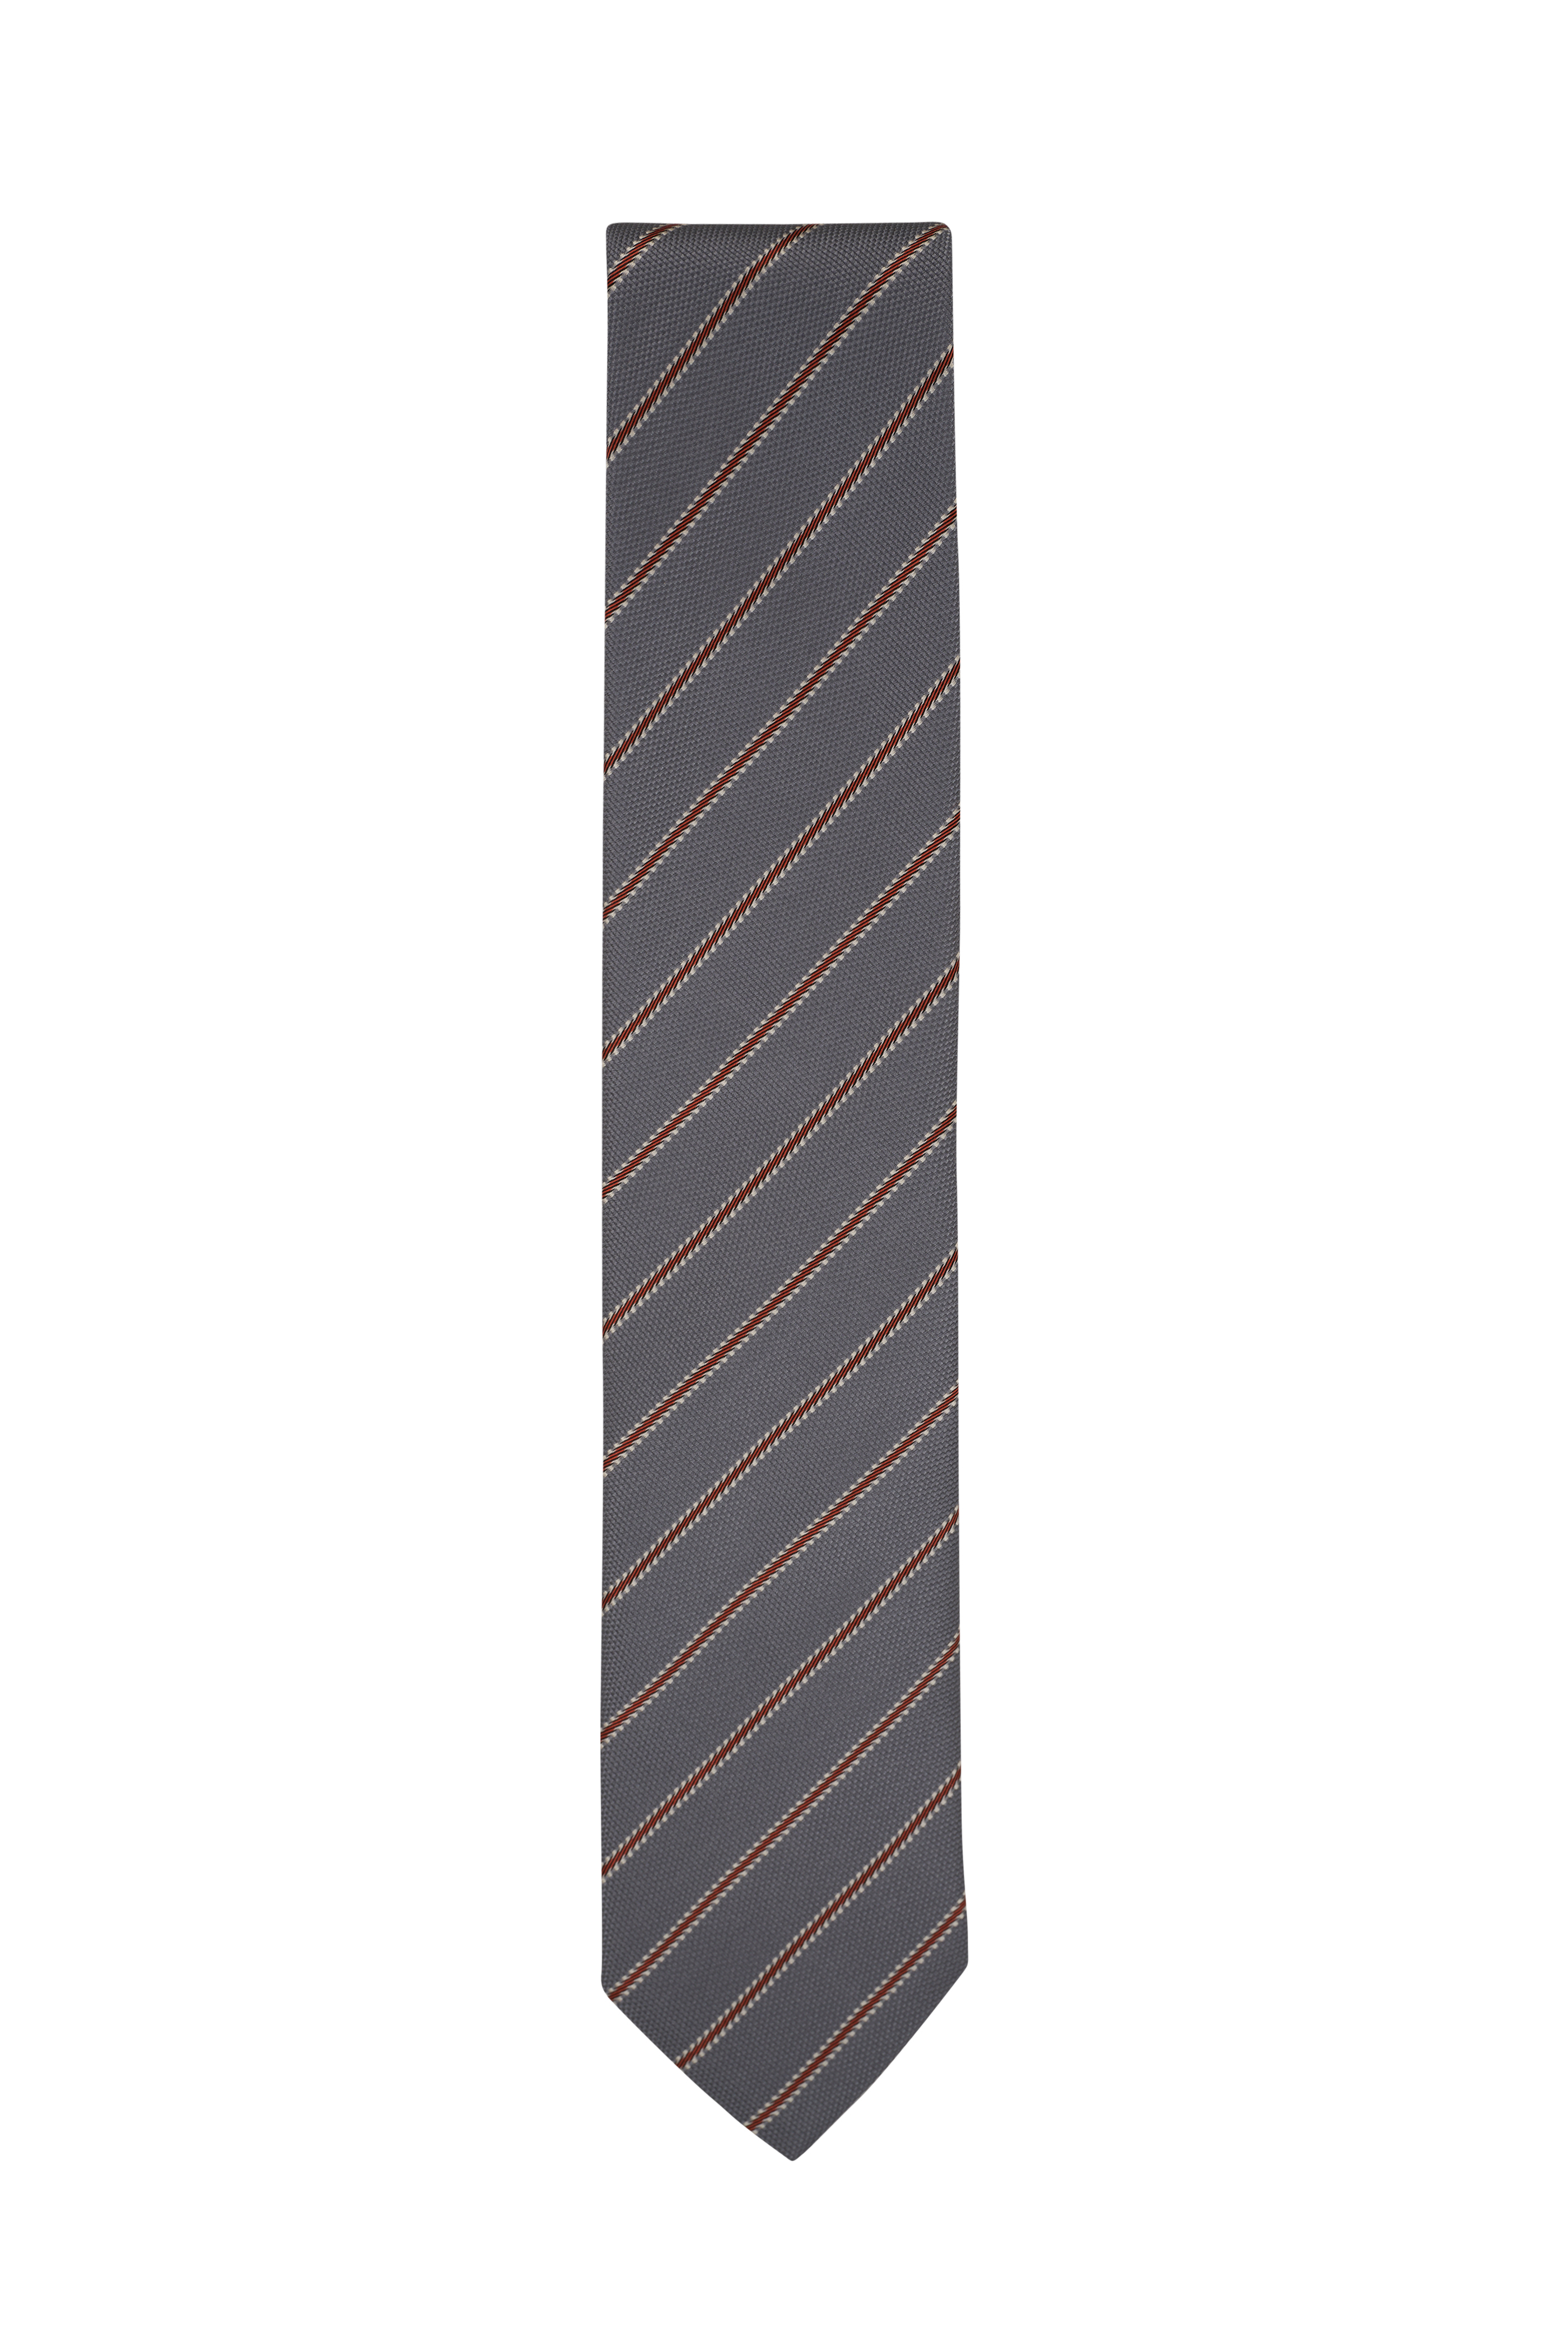 Black Dotted Shimmering Tie - Eton